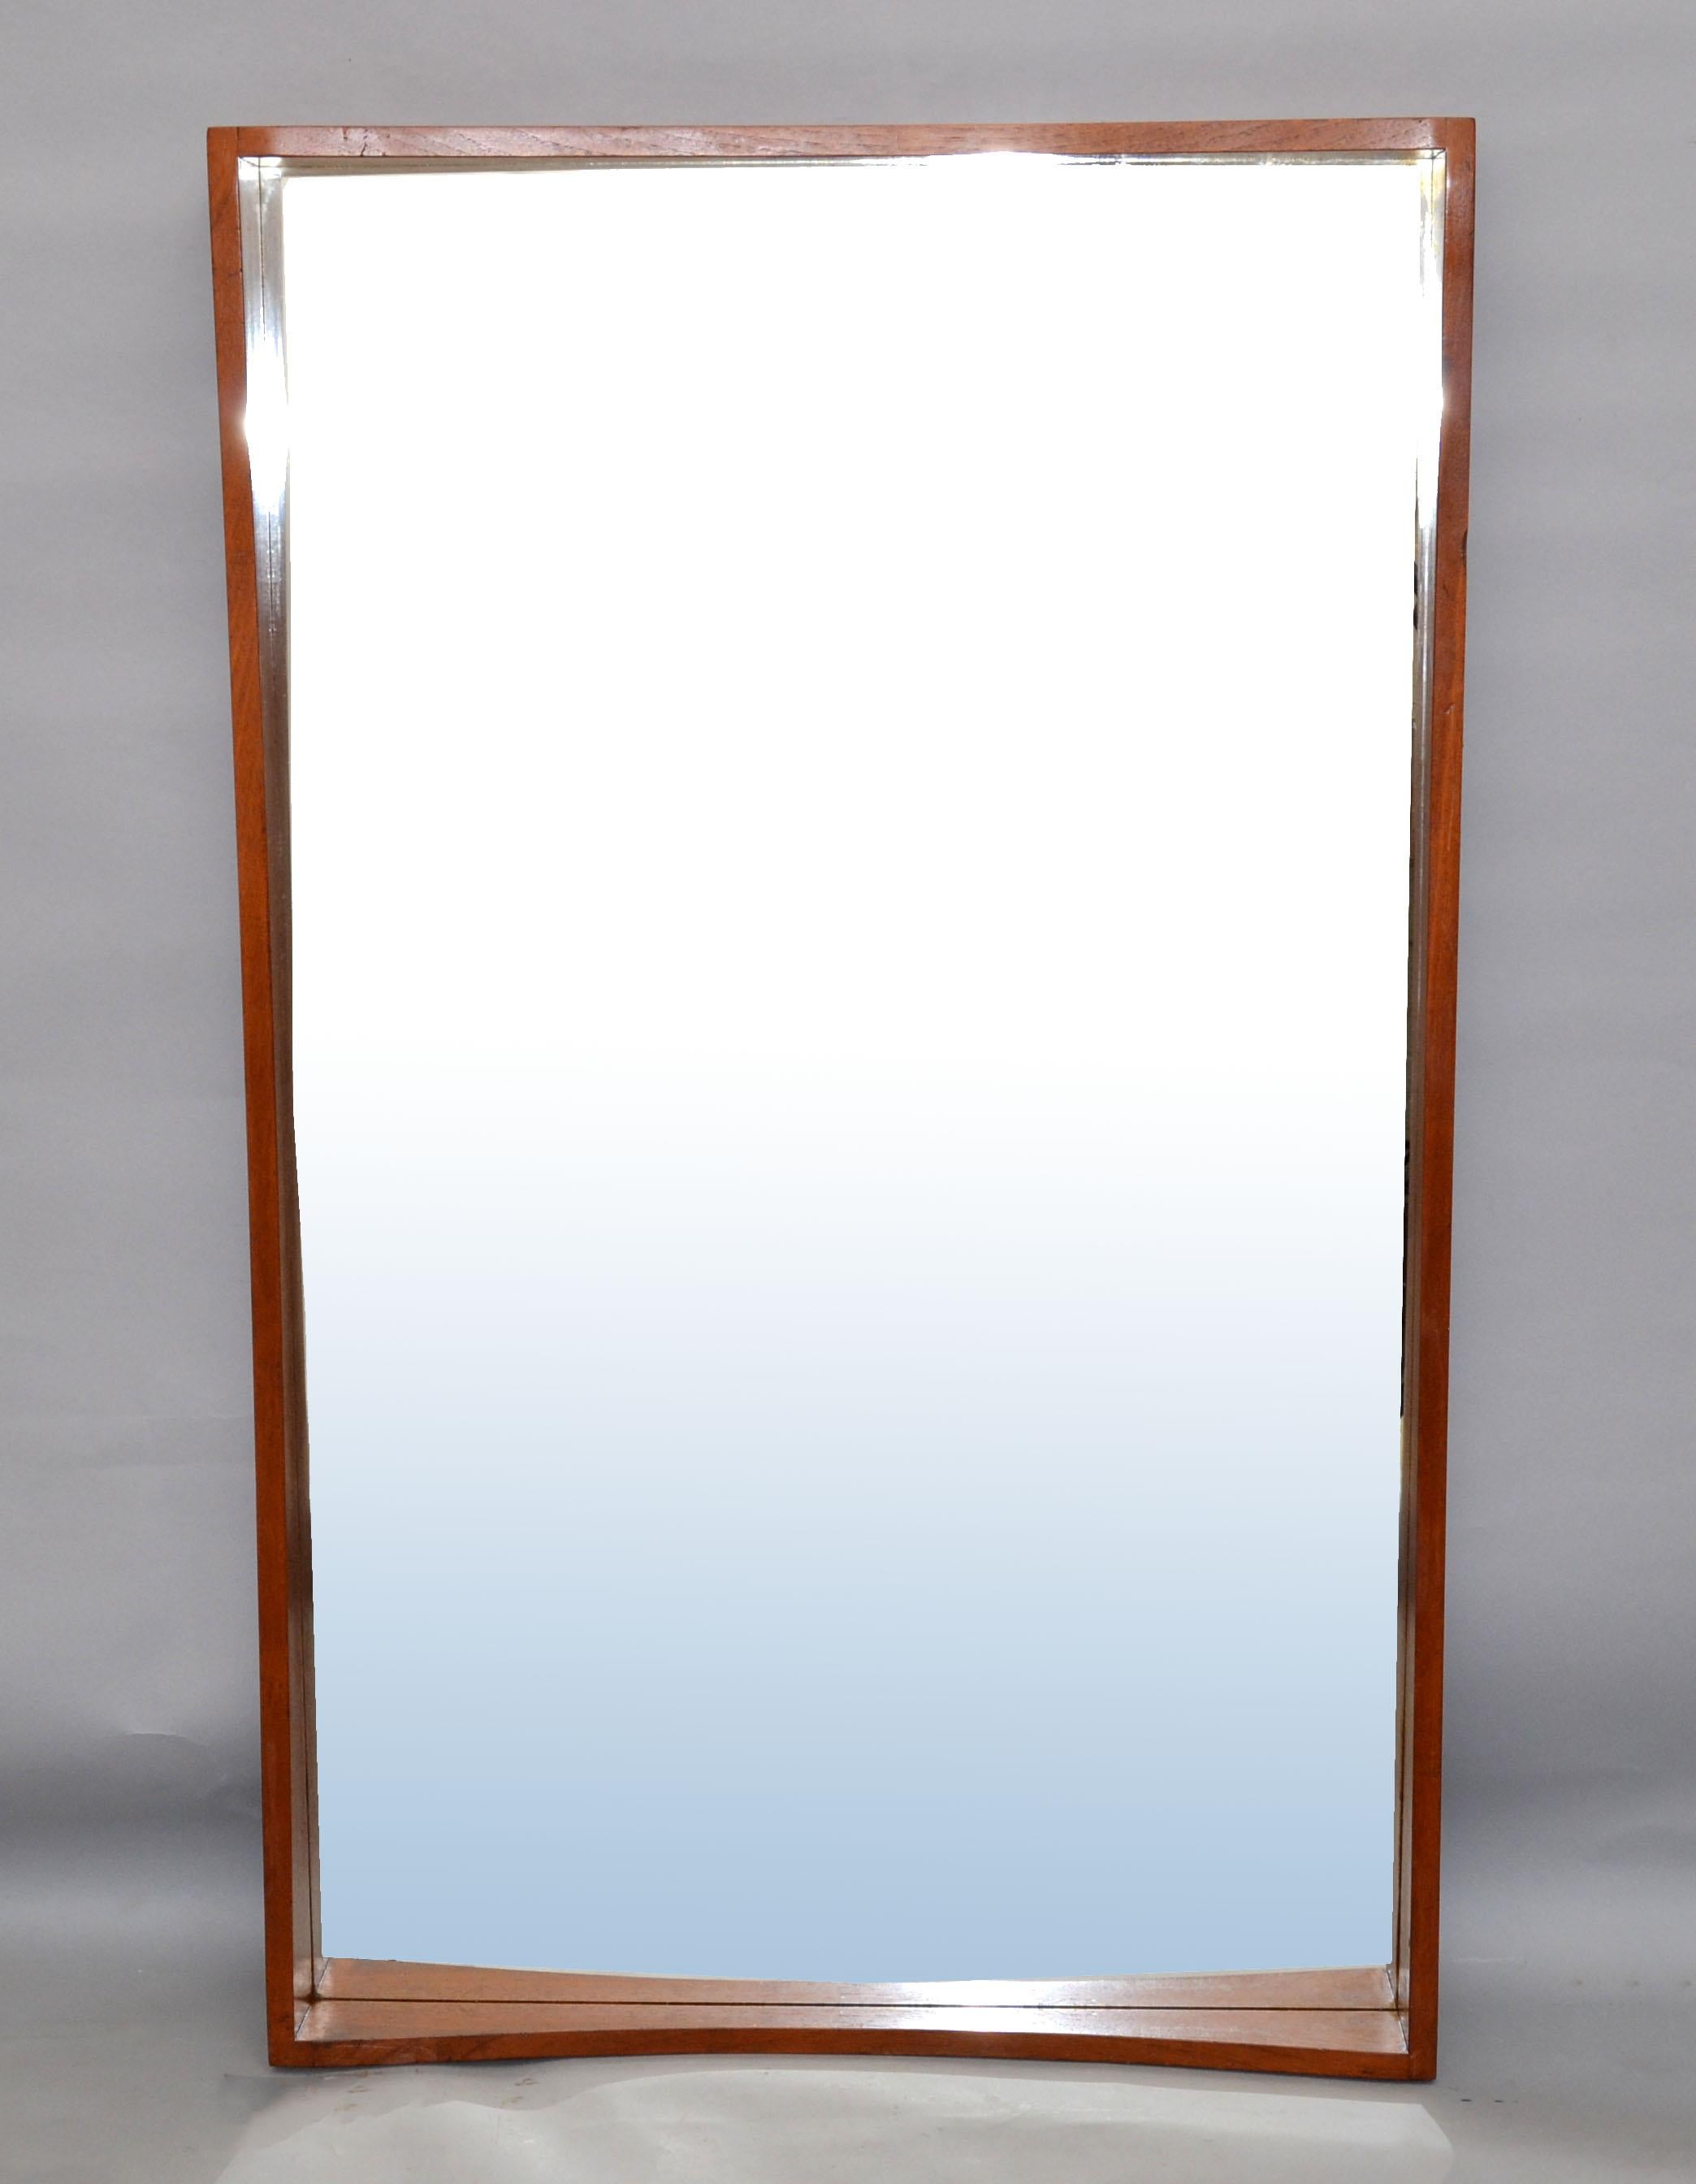 Pedersen & Hansen Scandinavian Modern Rectangle Dovetailed Teak Wall Mirror 1960 For Sale 1